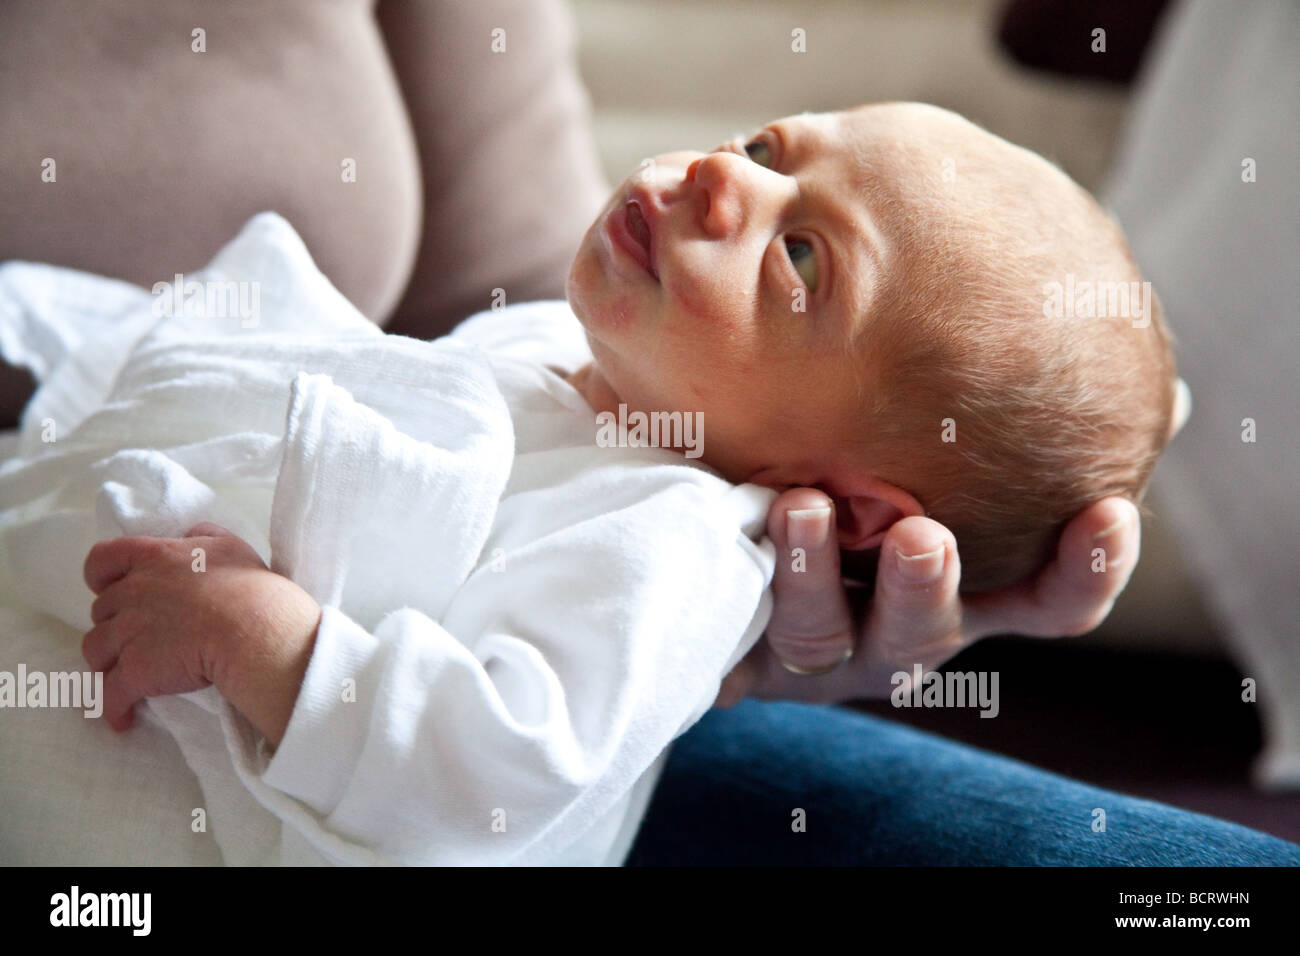 Natural Newborn Posing - Atlanta relaxed newborn photography